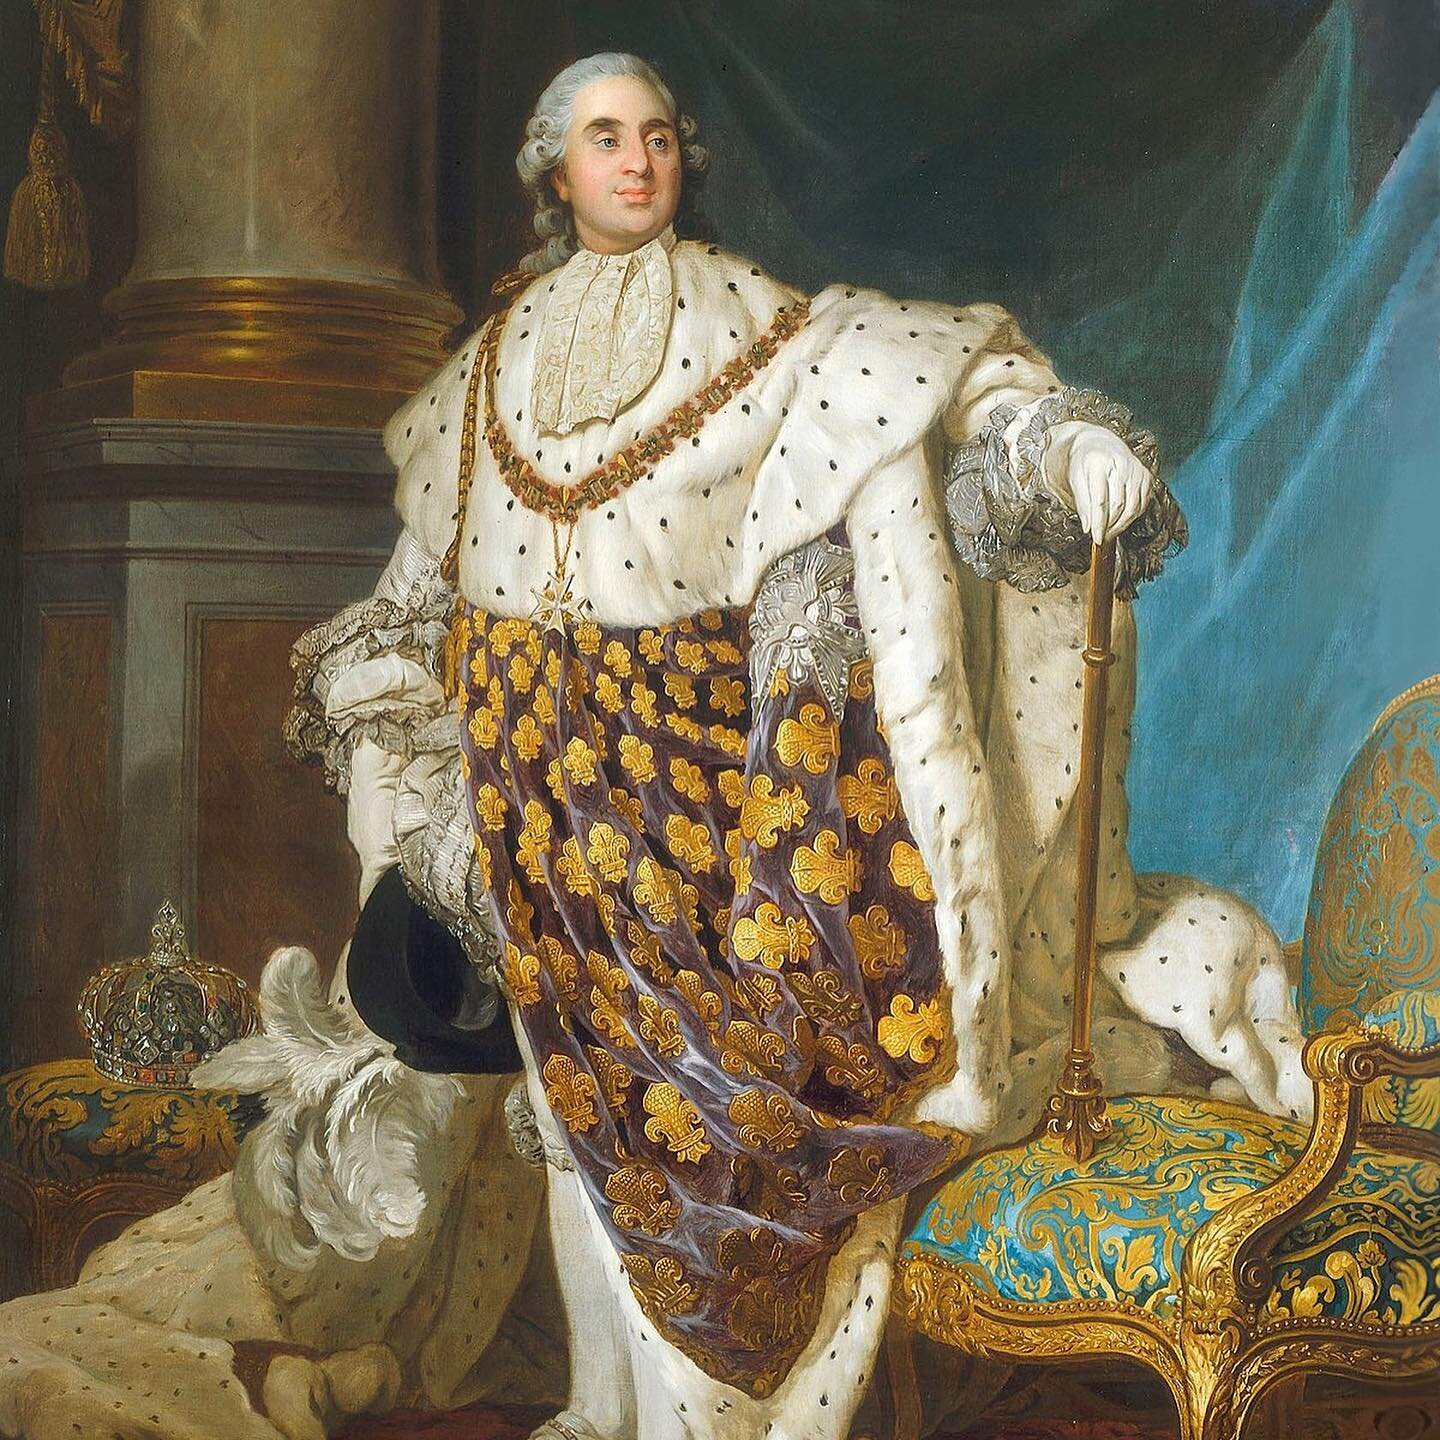 Louis-XVI-French-Revolution-Parisology.jpg